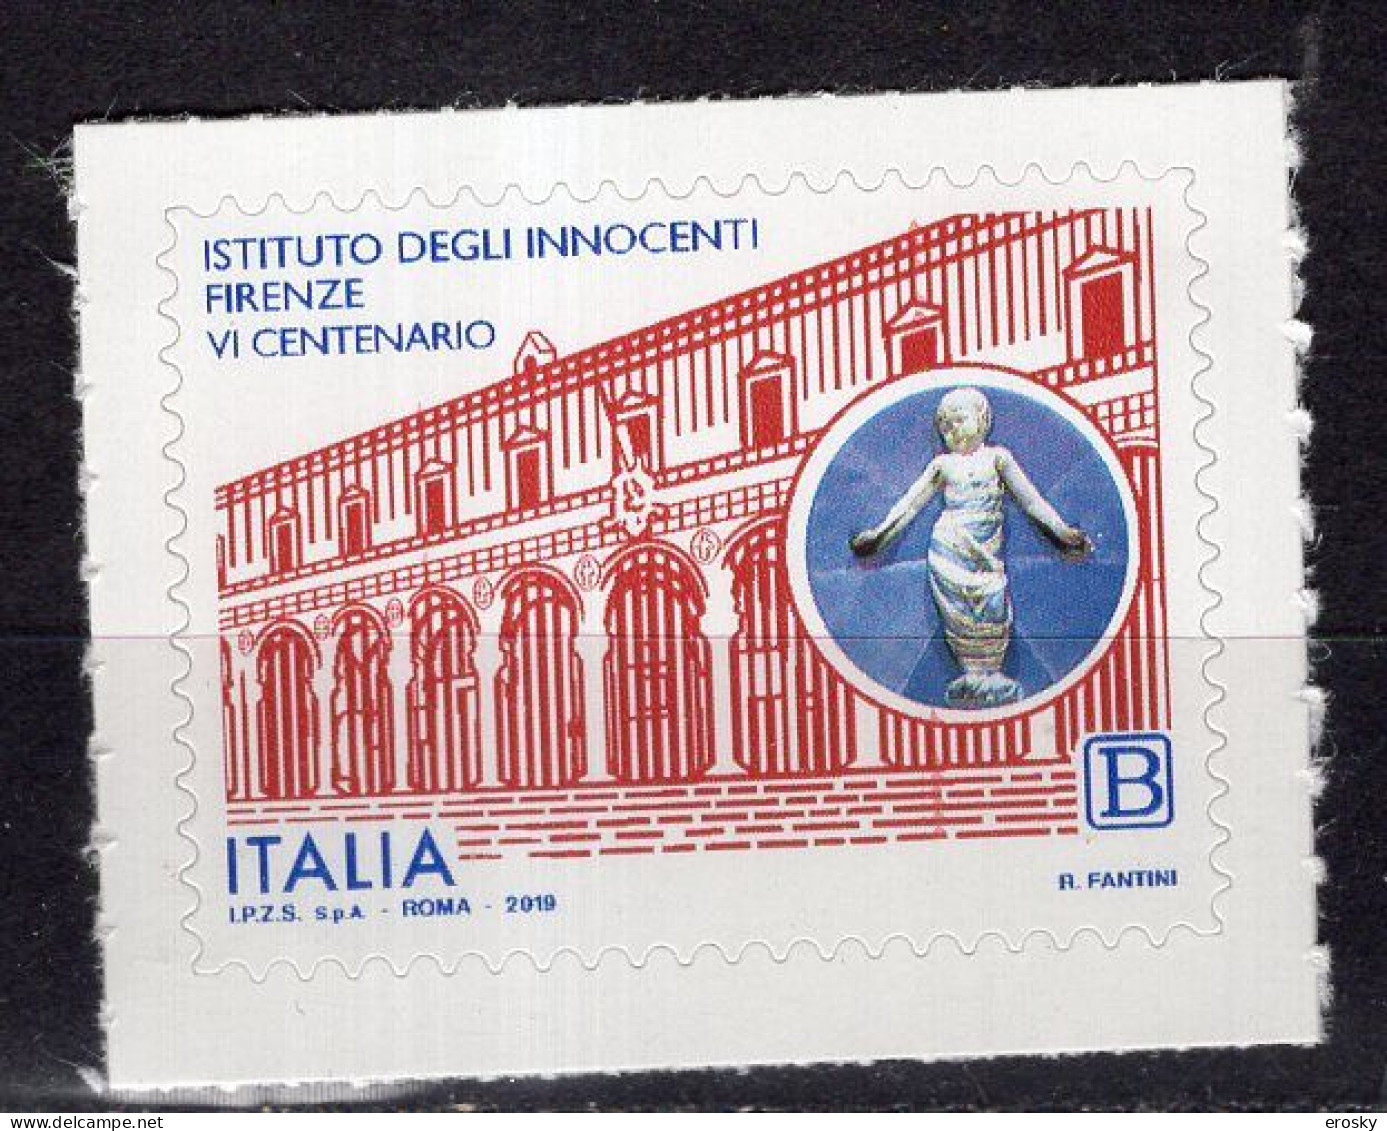 Y2543 - ITALIA ITALIE Unificato N°3999 ** - 2011-20: Nieuw/plakker